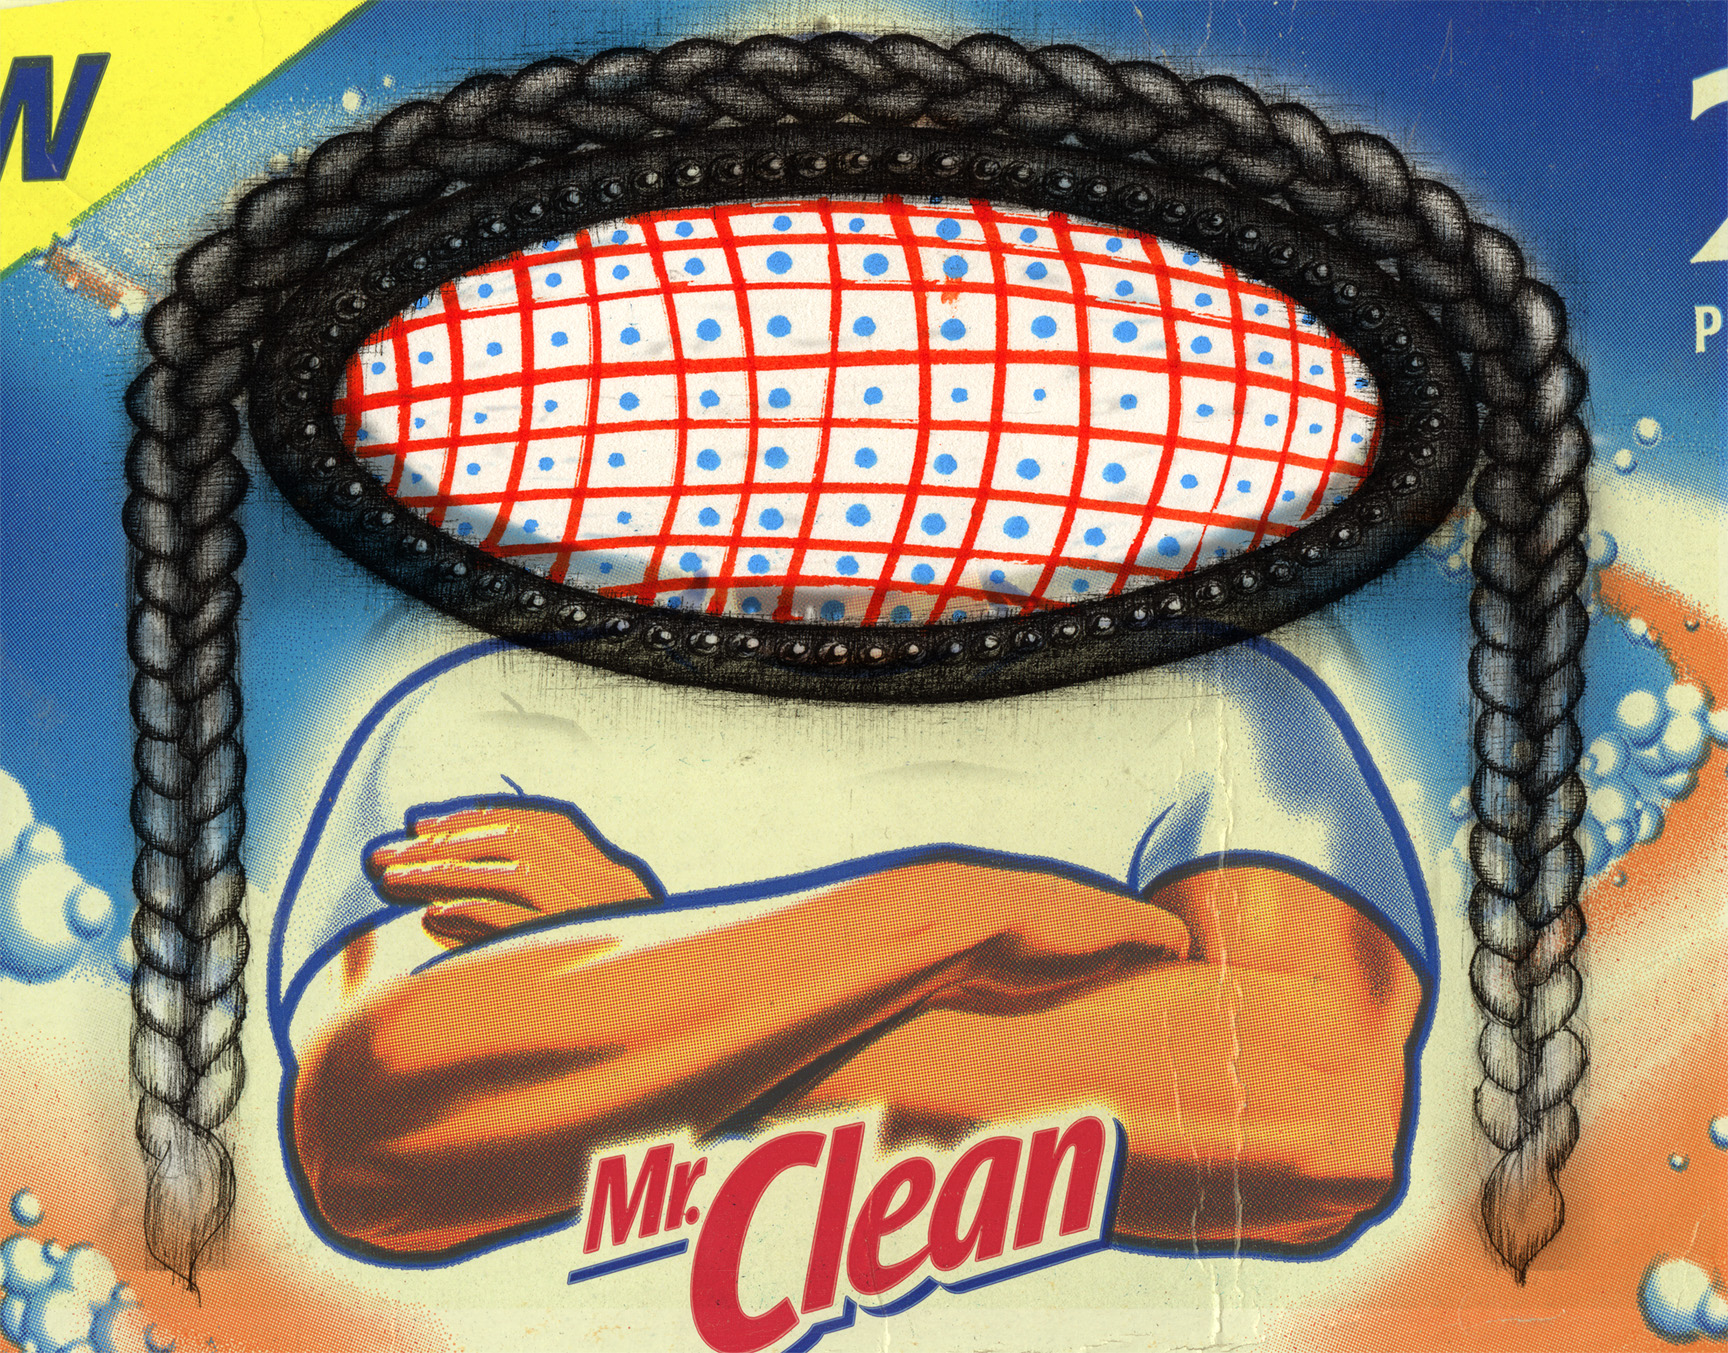 Mr. Clean, 2013